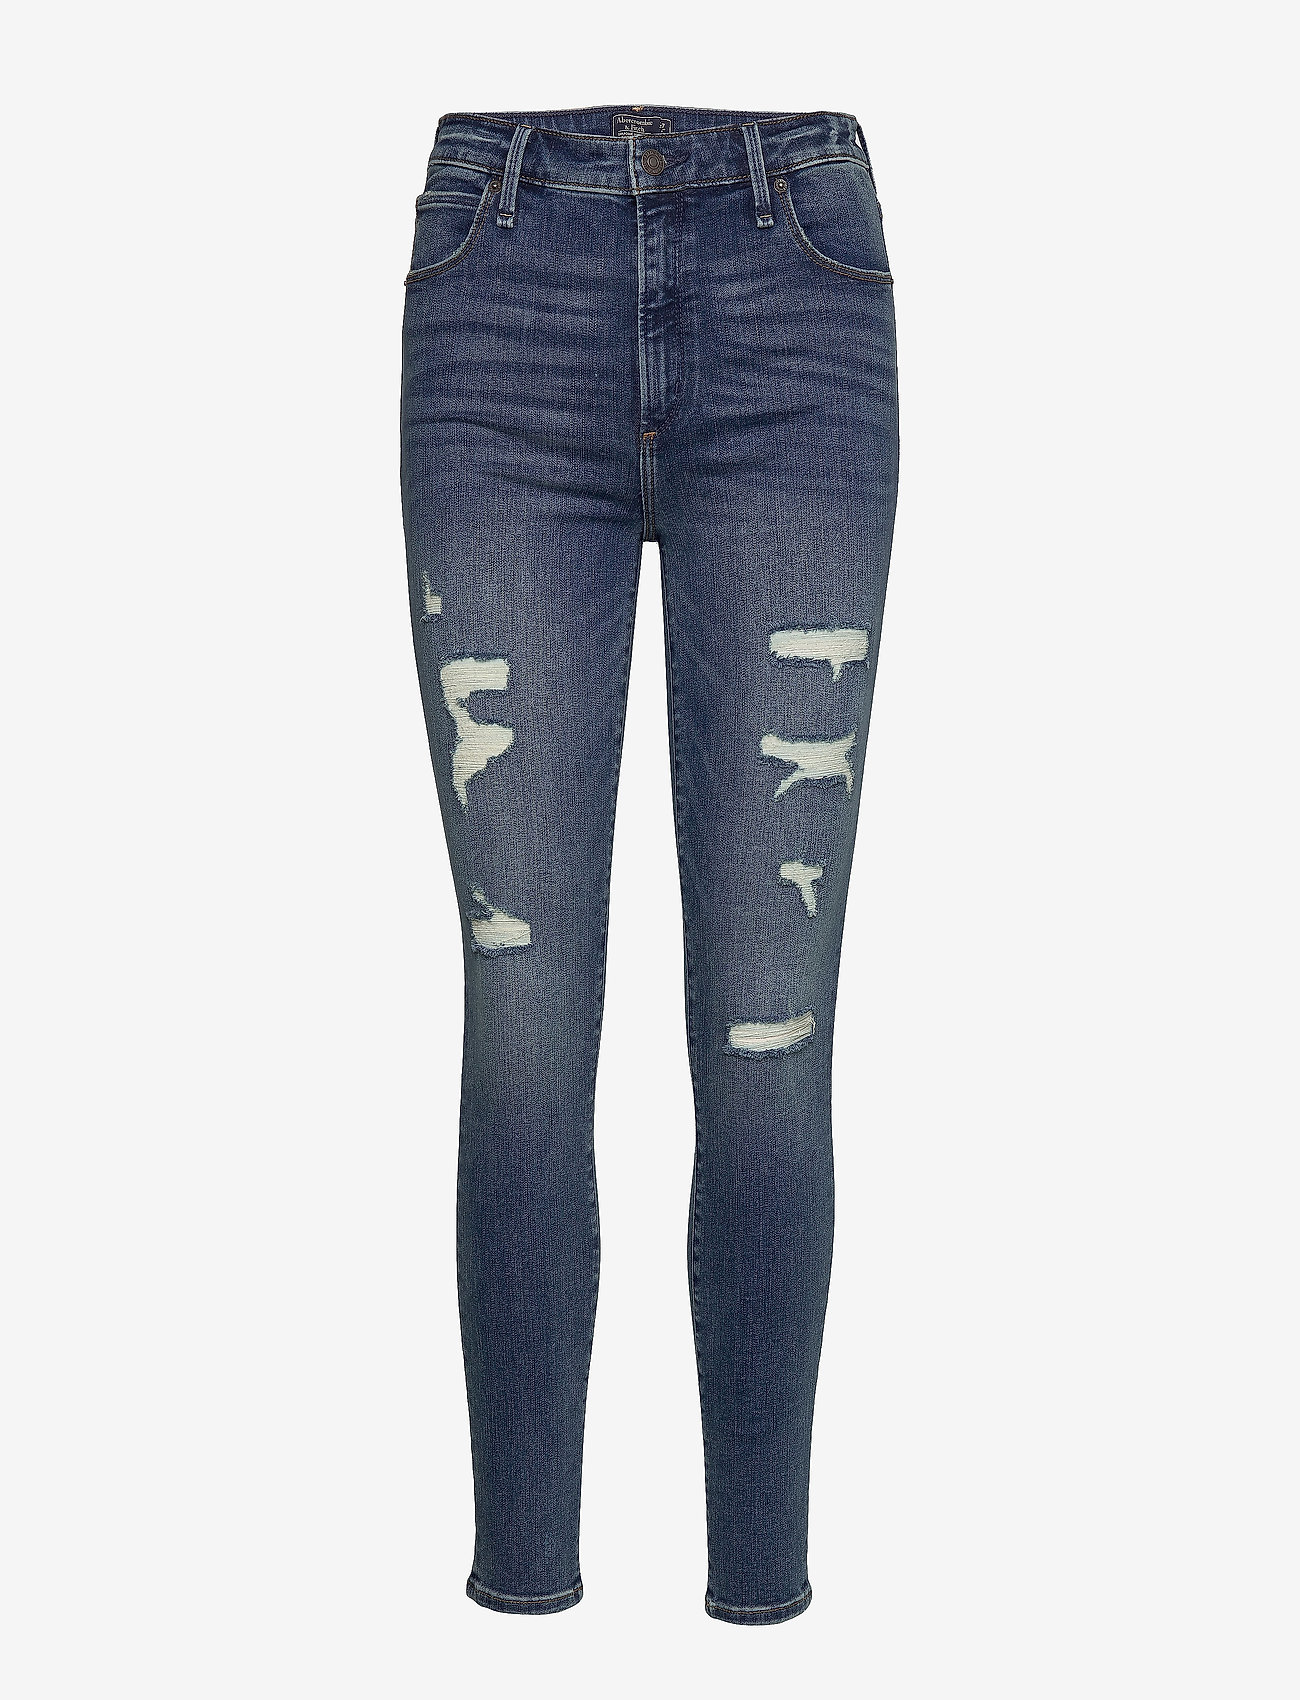 abercrombie & fitch skinny jeans